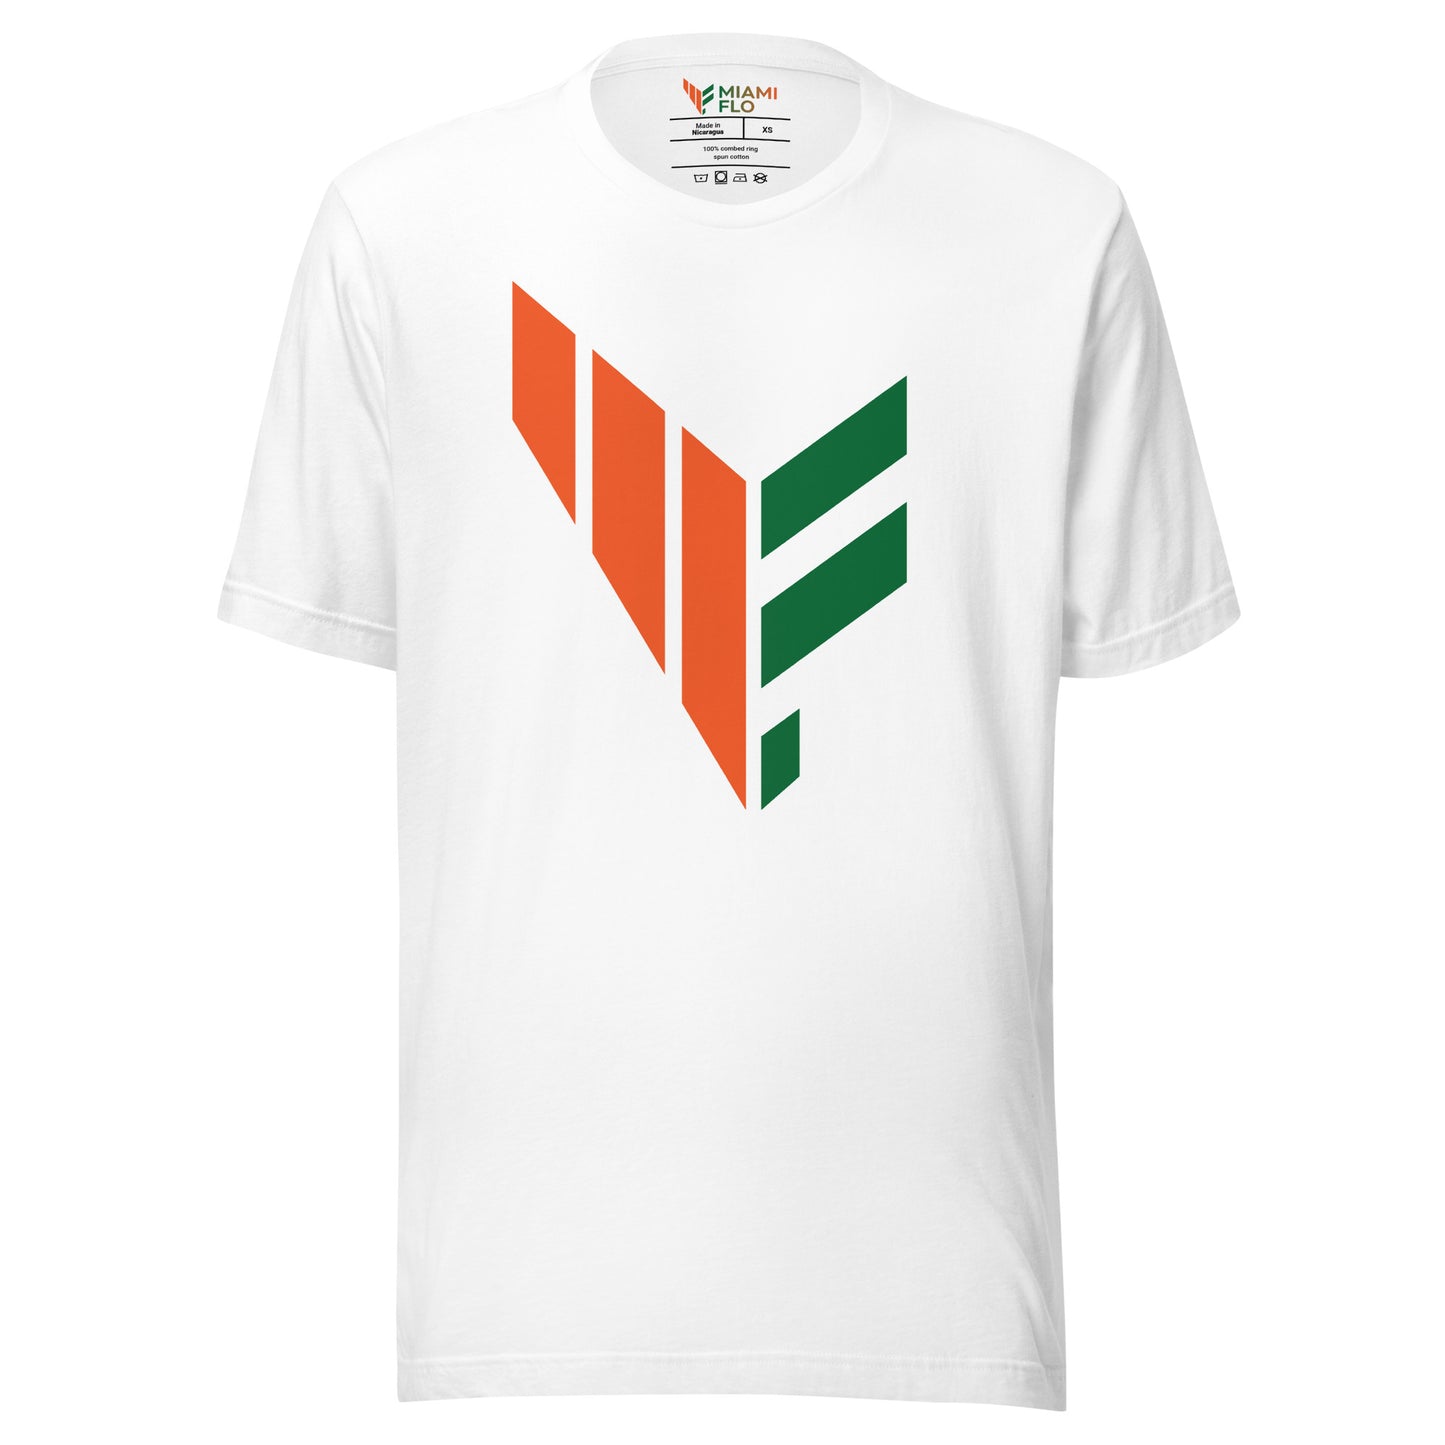 Miami Flo Shirt - Designed By Jas